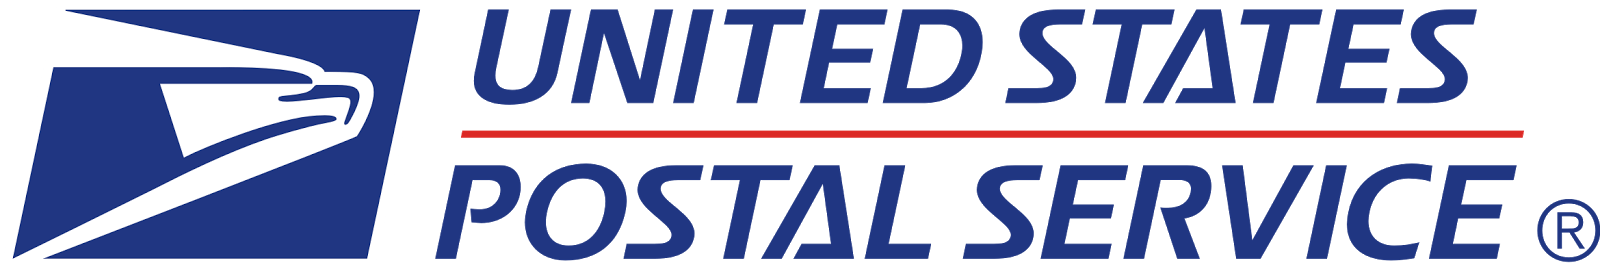 The logo of united states postal service 